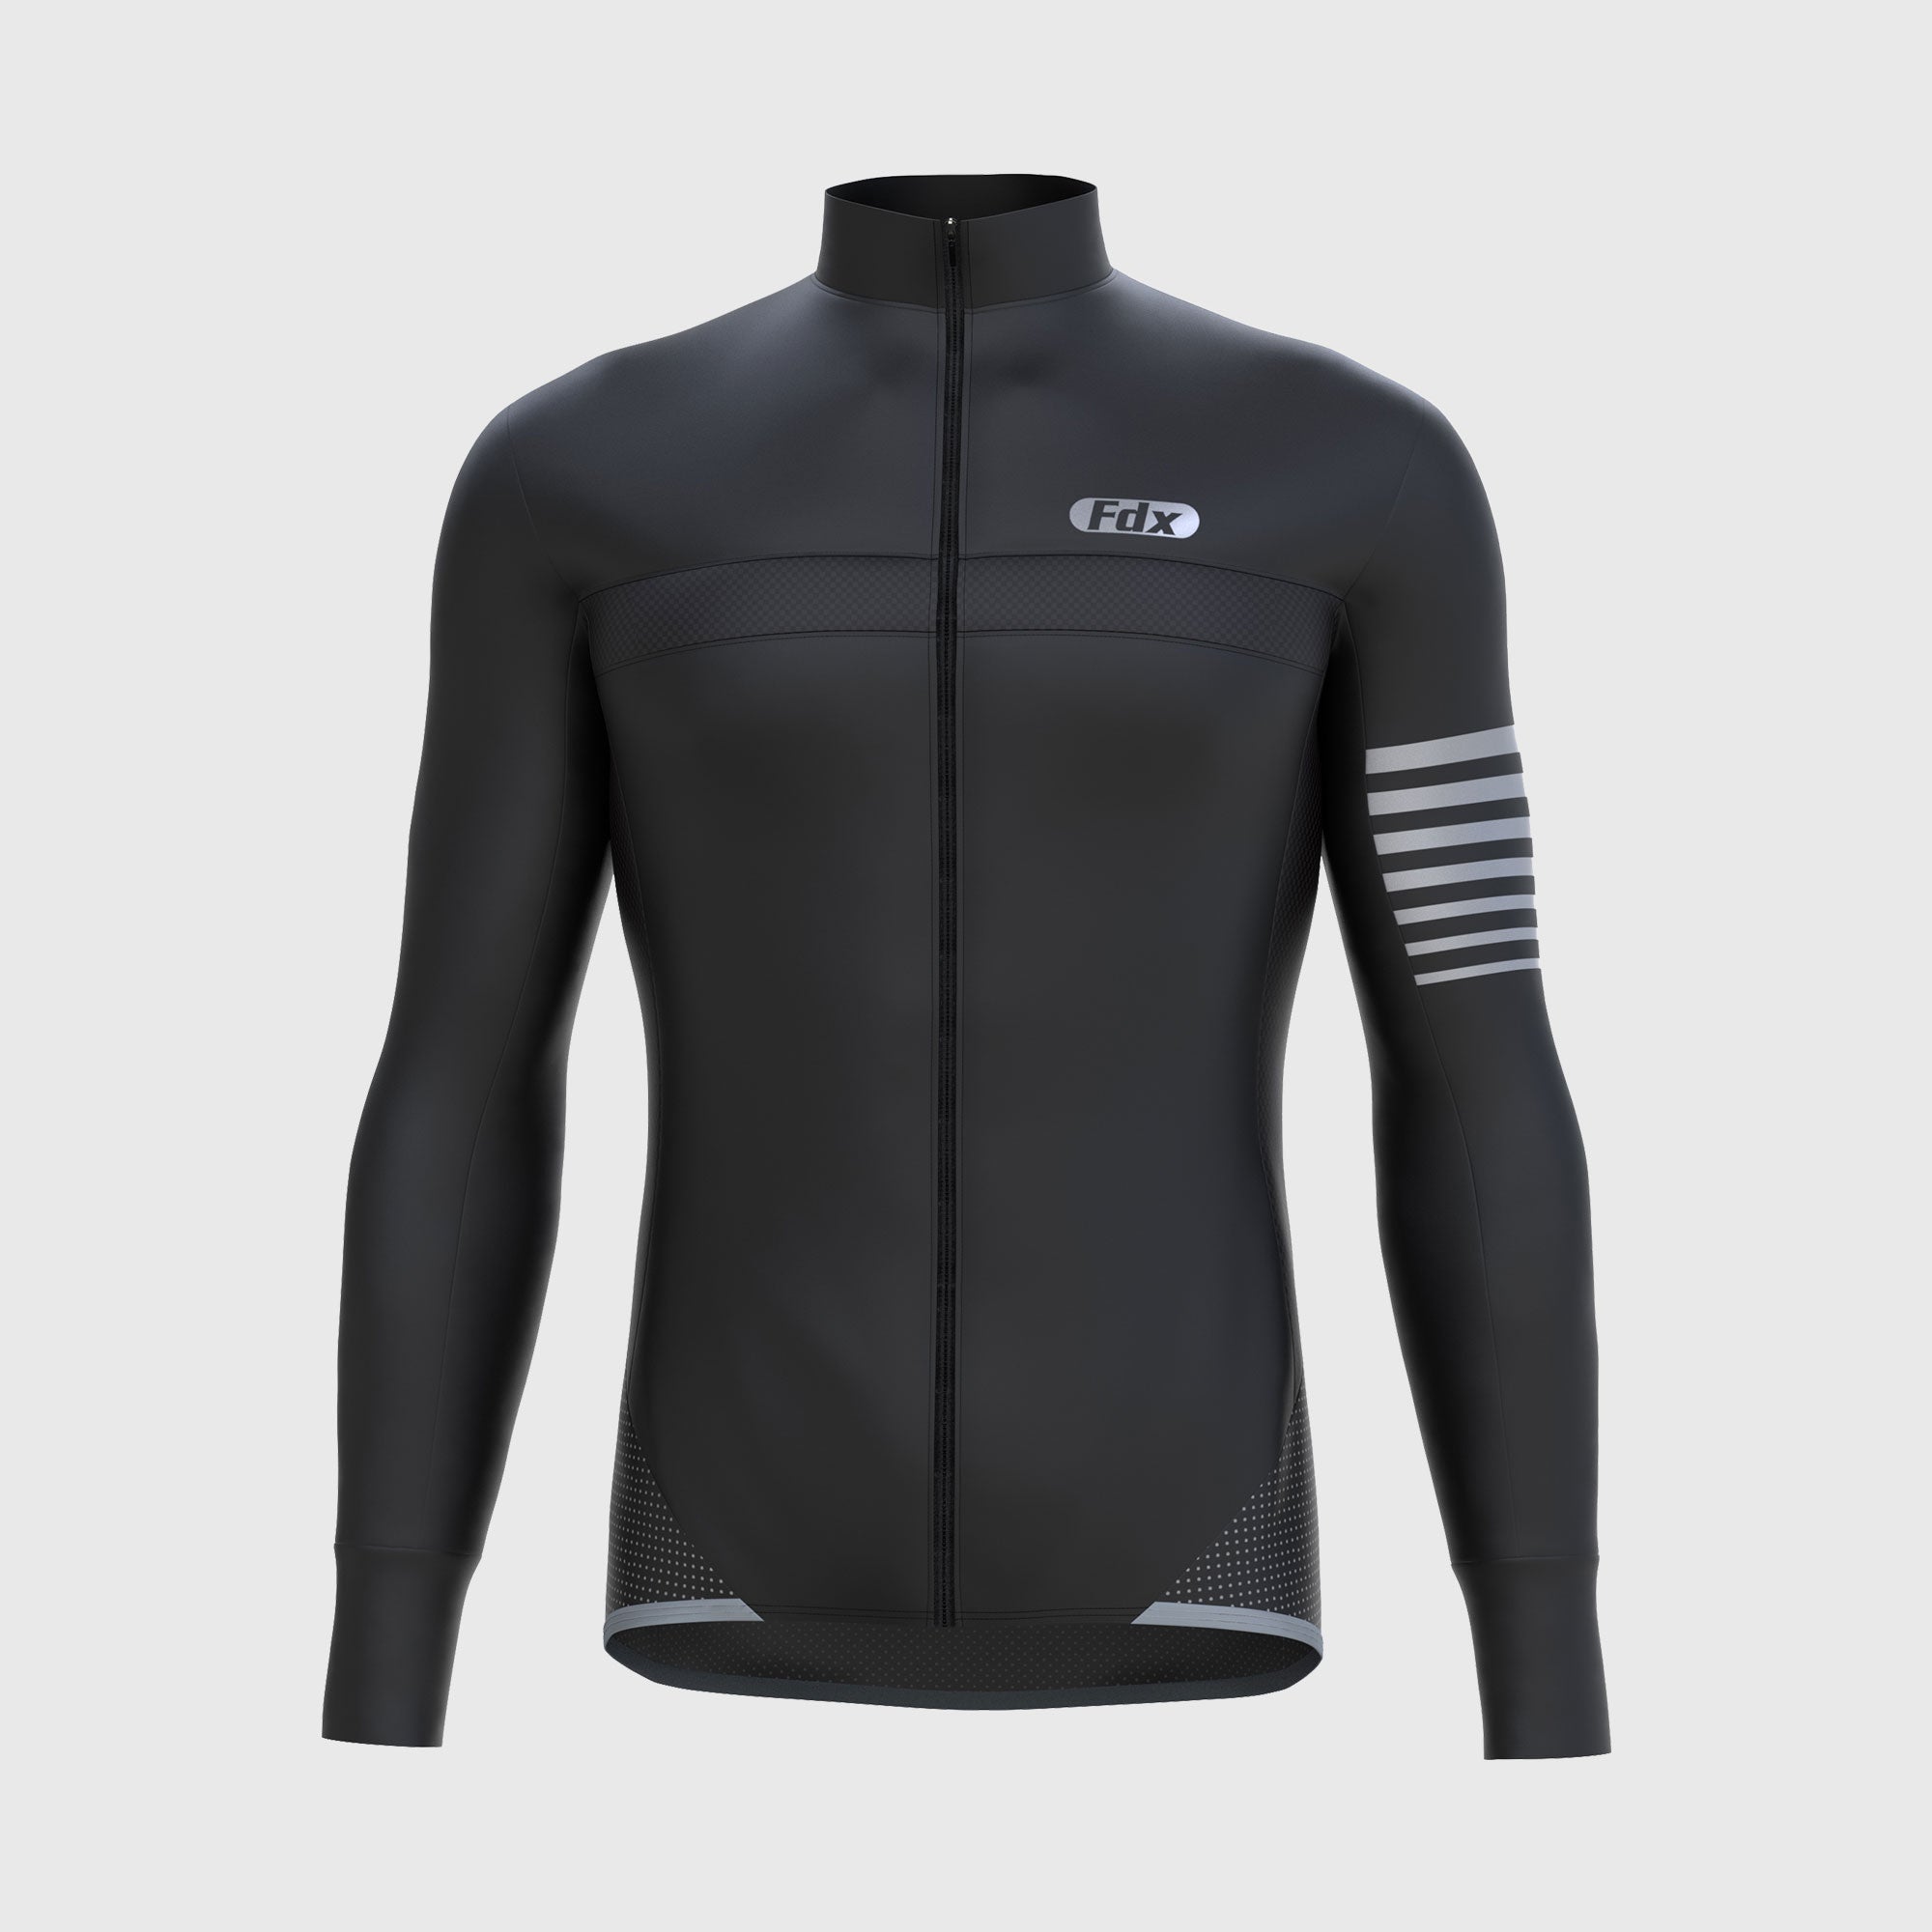 Fdx Mens Black Long Sleeve Cycling Jersey for Winter Roubaix Thermal Fleece Road Bike Wear Top Full Zipper, Pockets & Hi-viz Reflectors - All Day